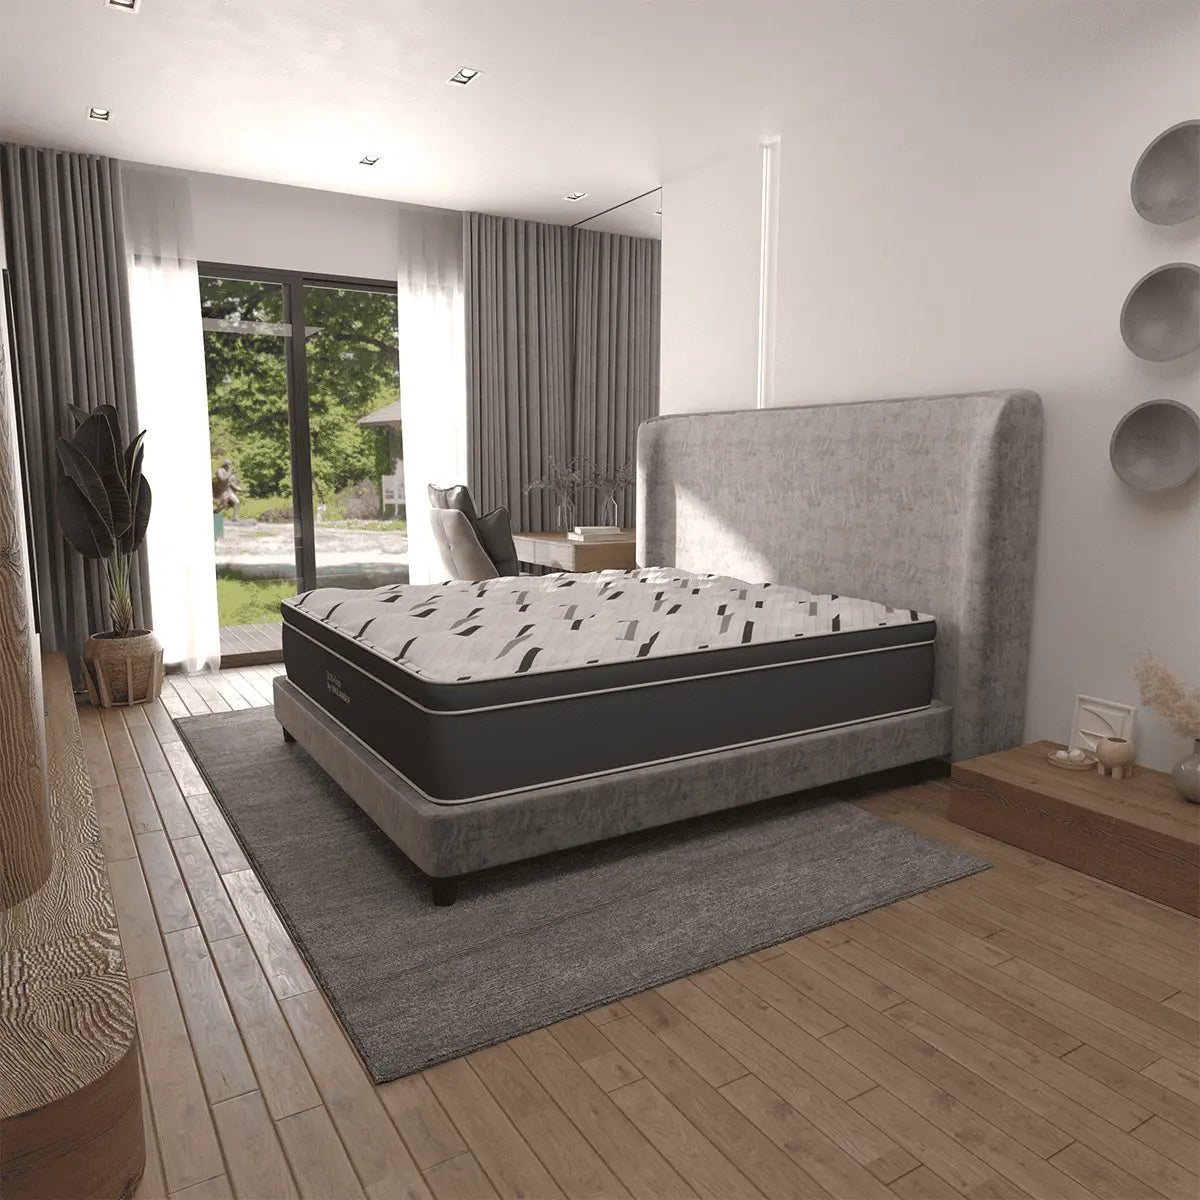 bodiform gel euro top mattress by englander - front side view